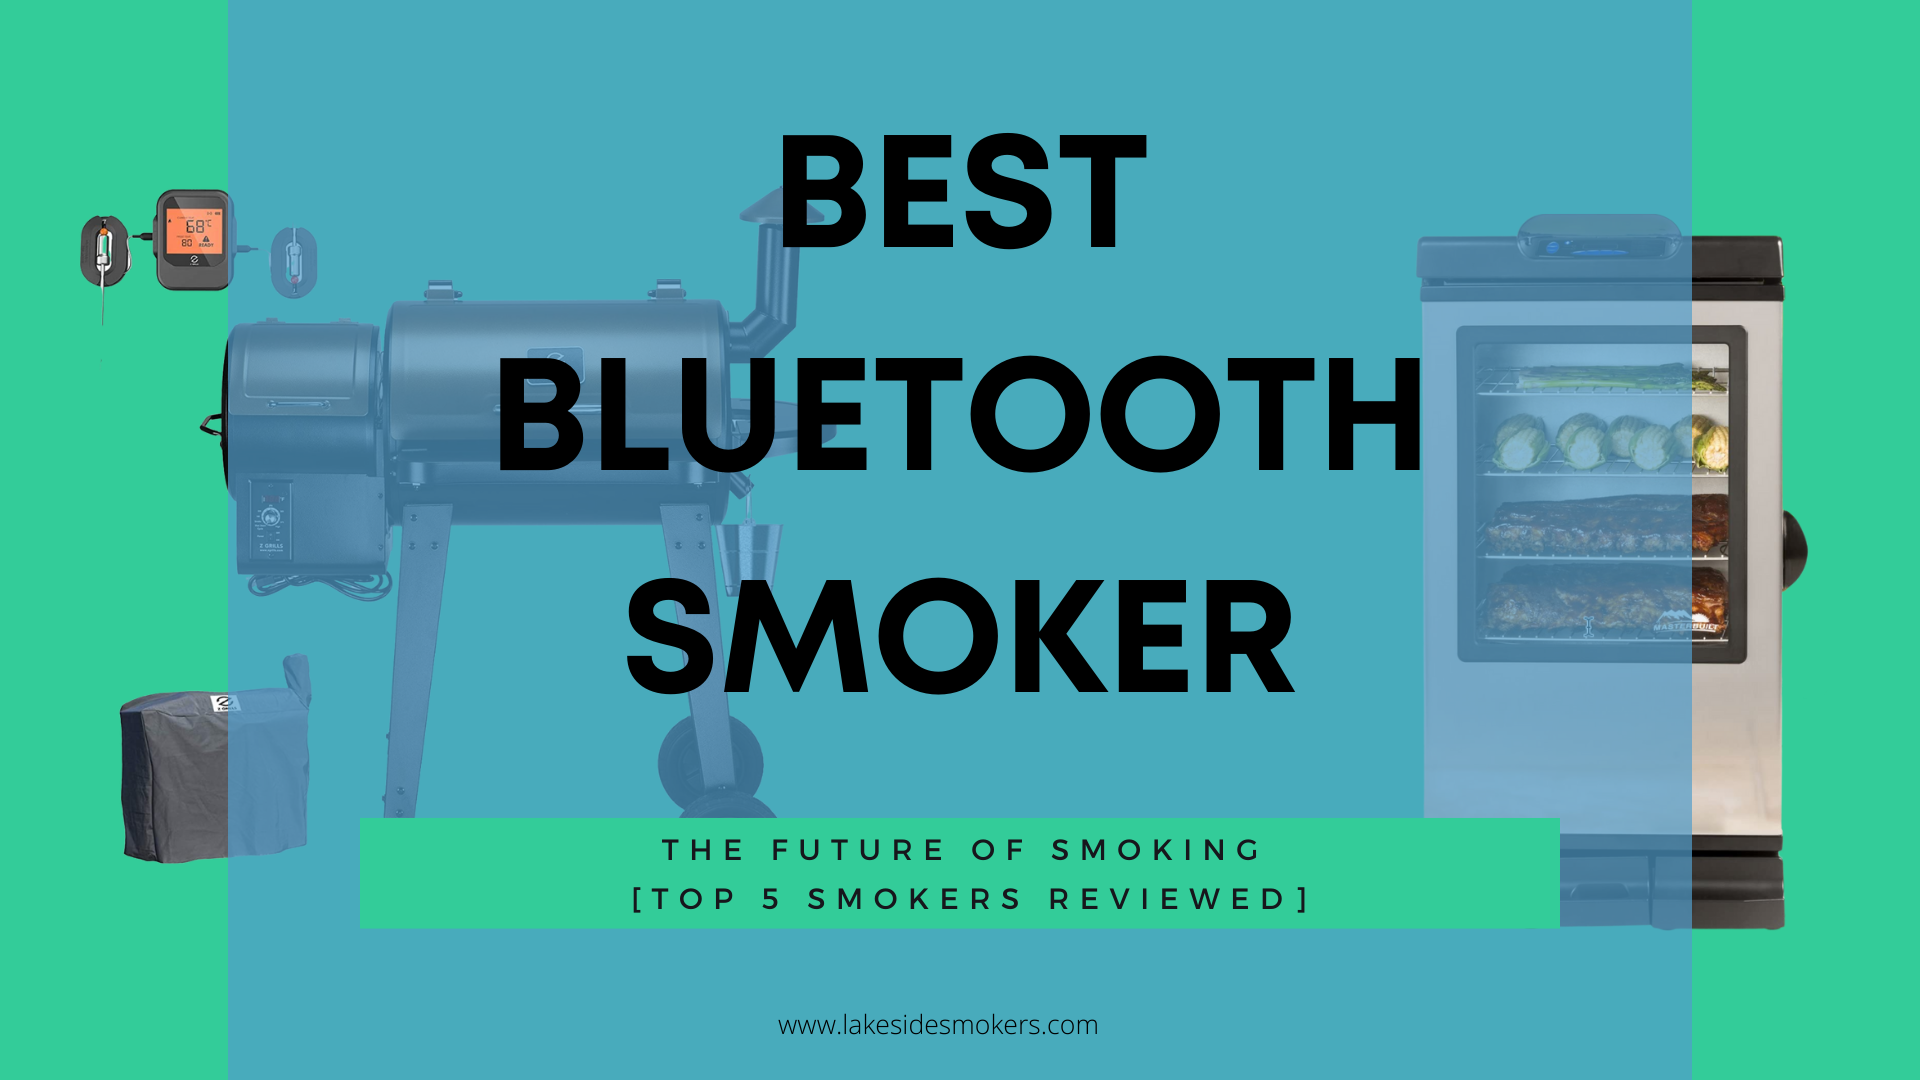 Best bluetooth smoker the future of smoking top 5 smokers reviewed